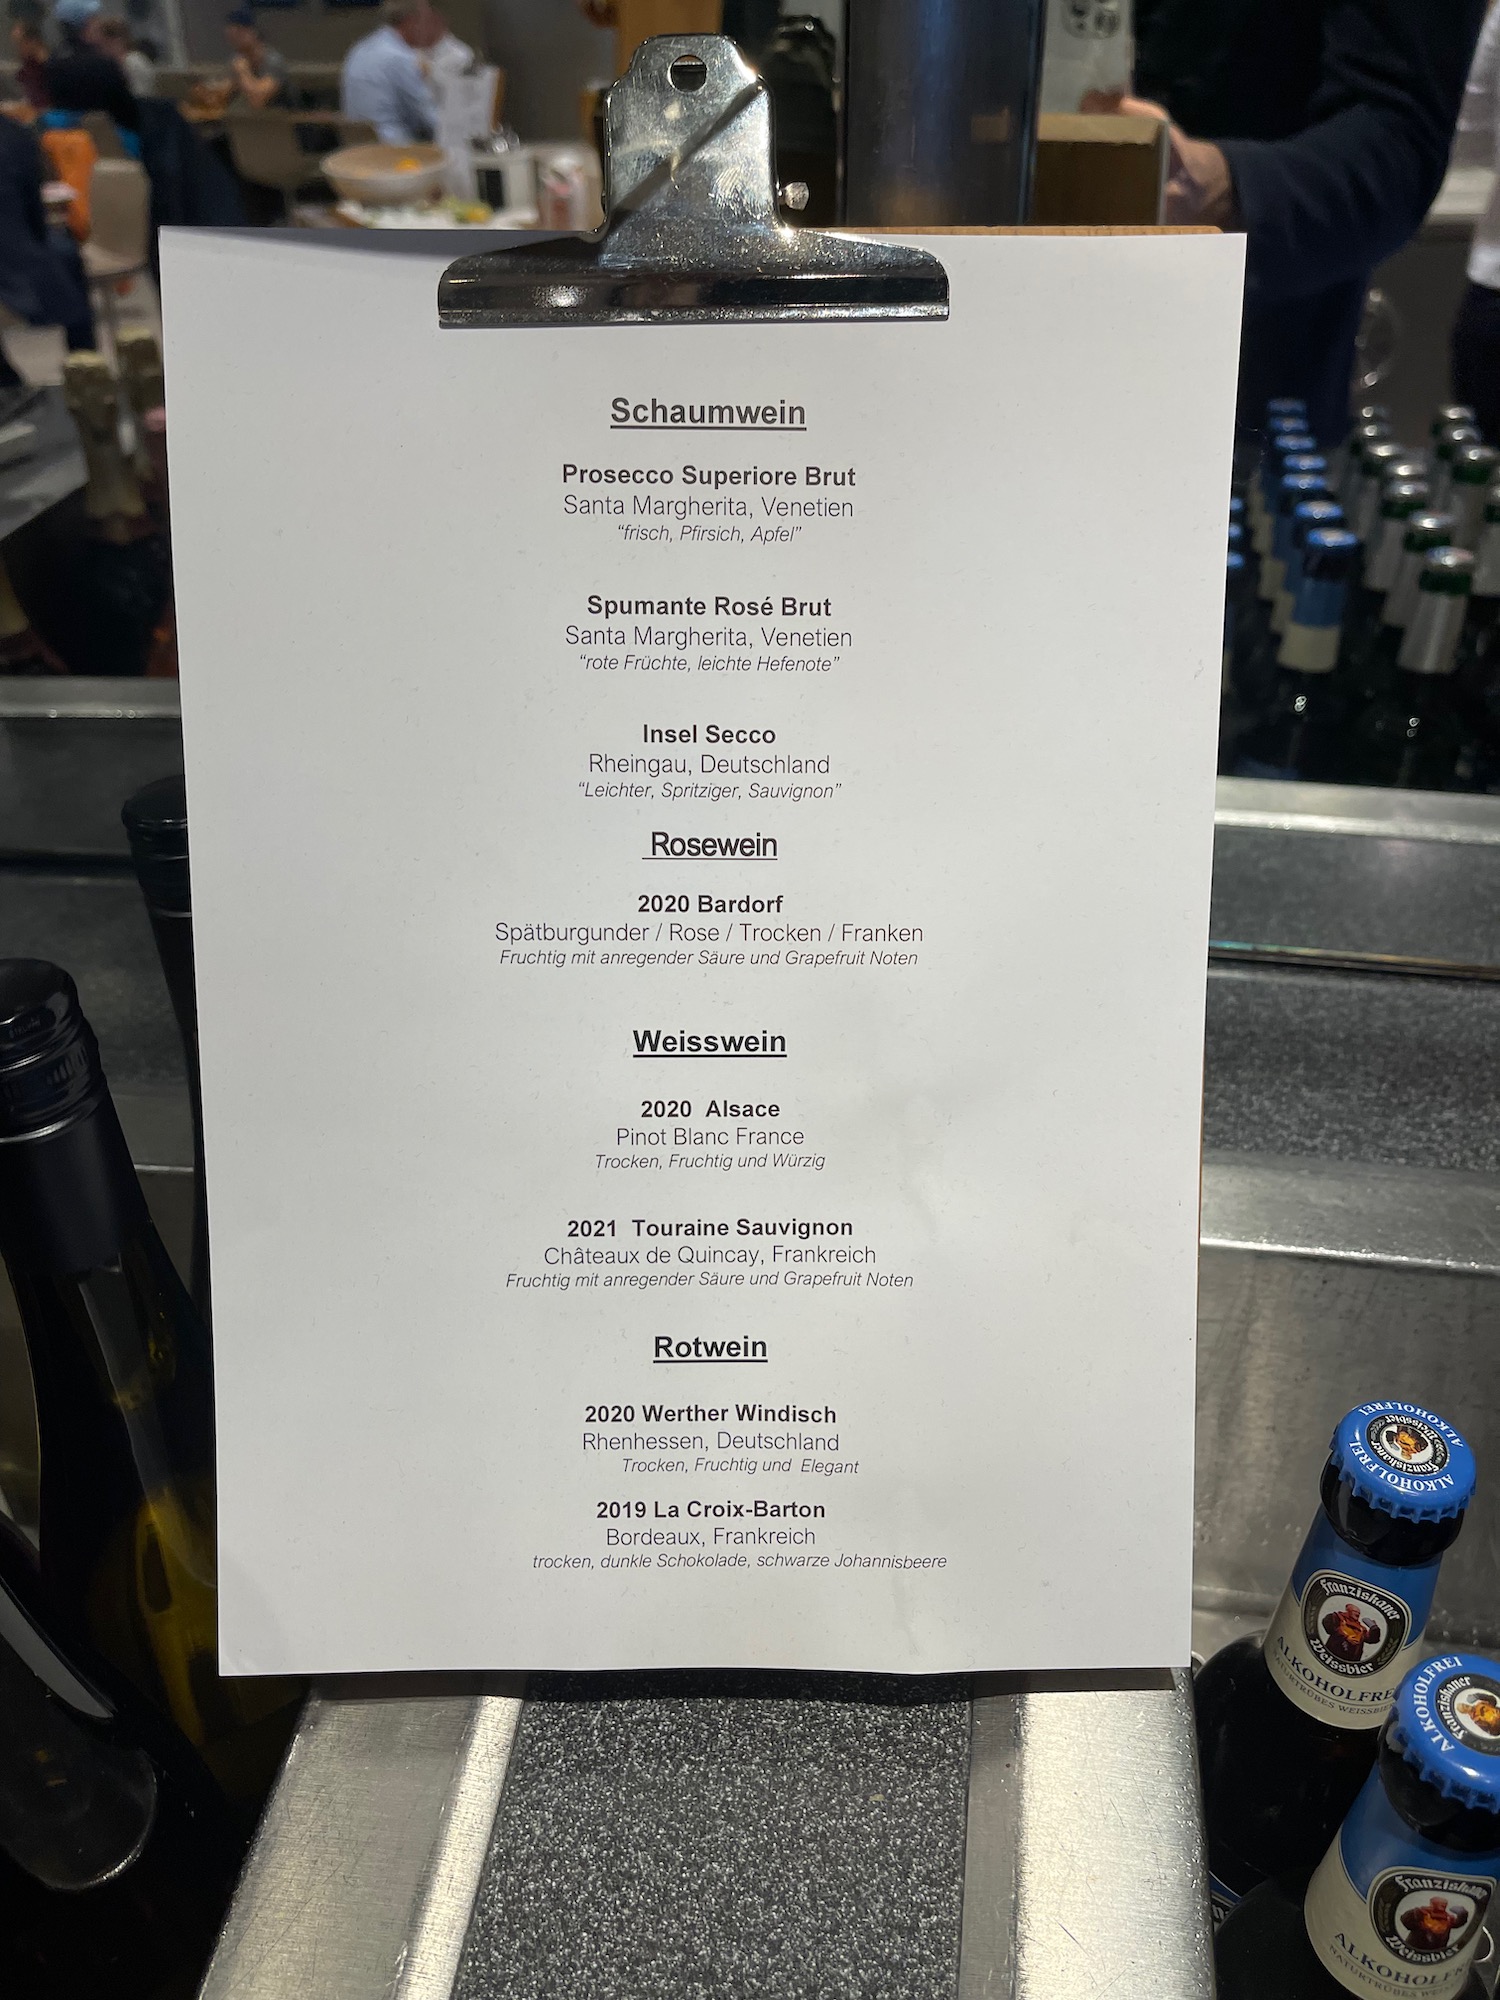 a menu on a clipboard